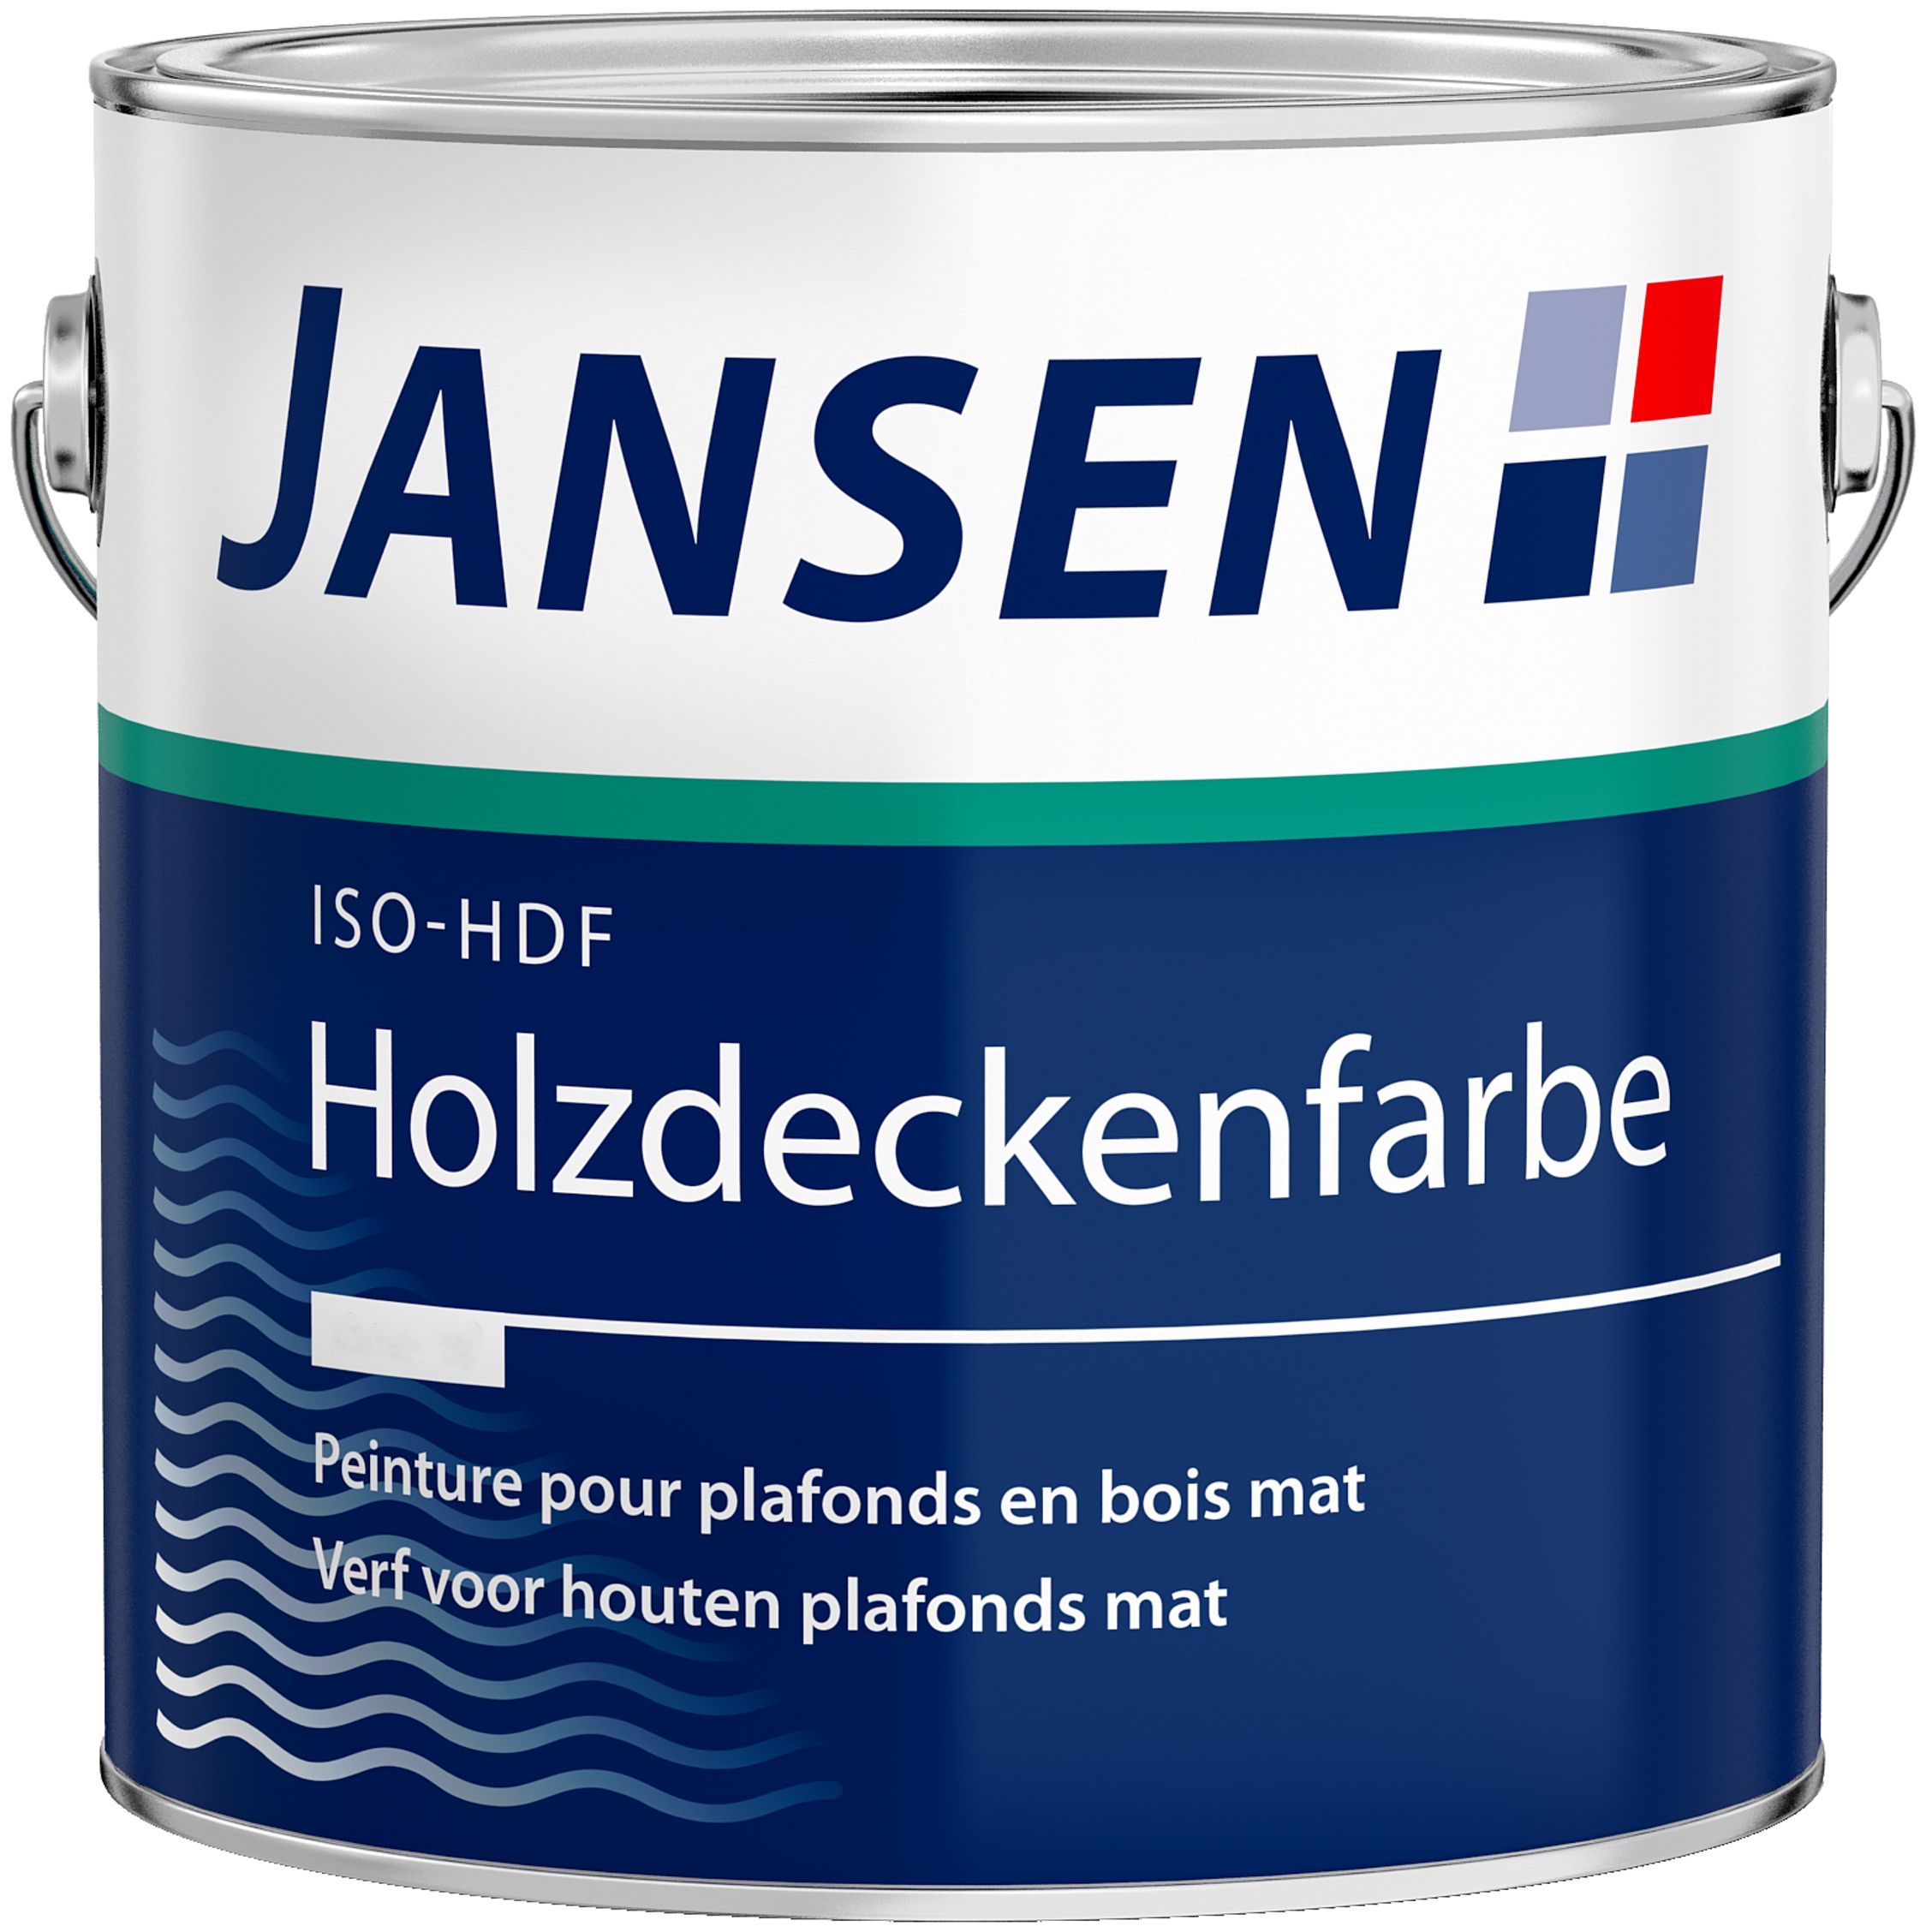 ISO-HDF Holzdeckenfarbe 2.5 Liter